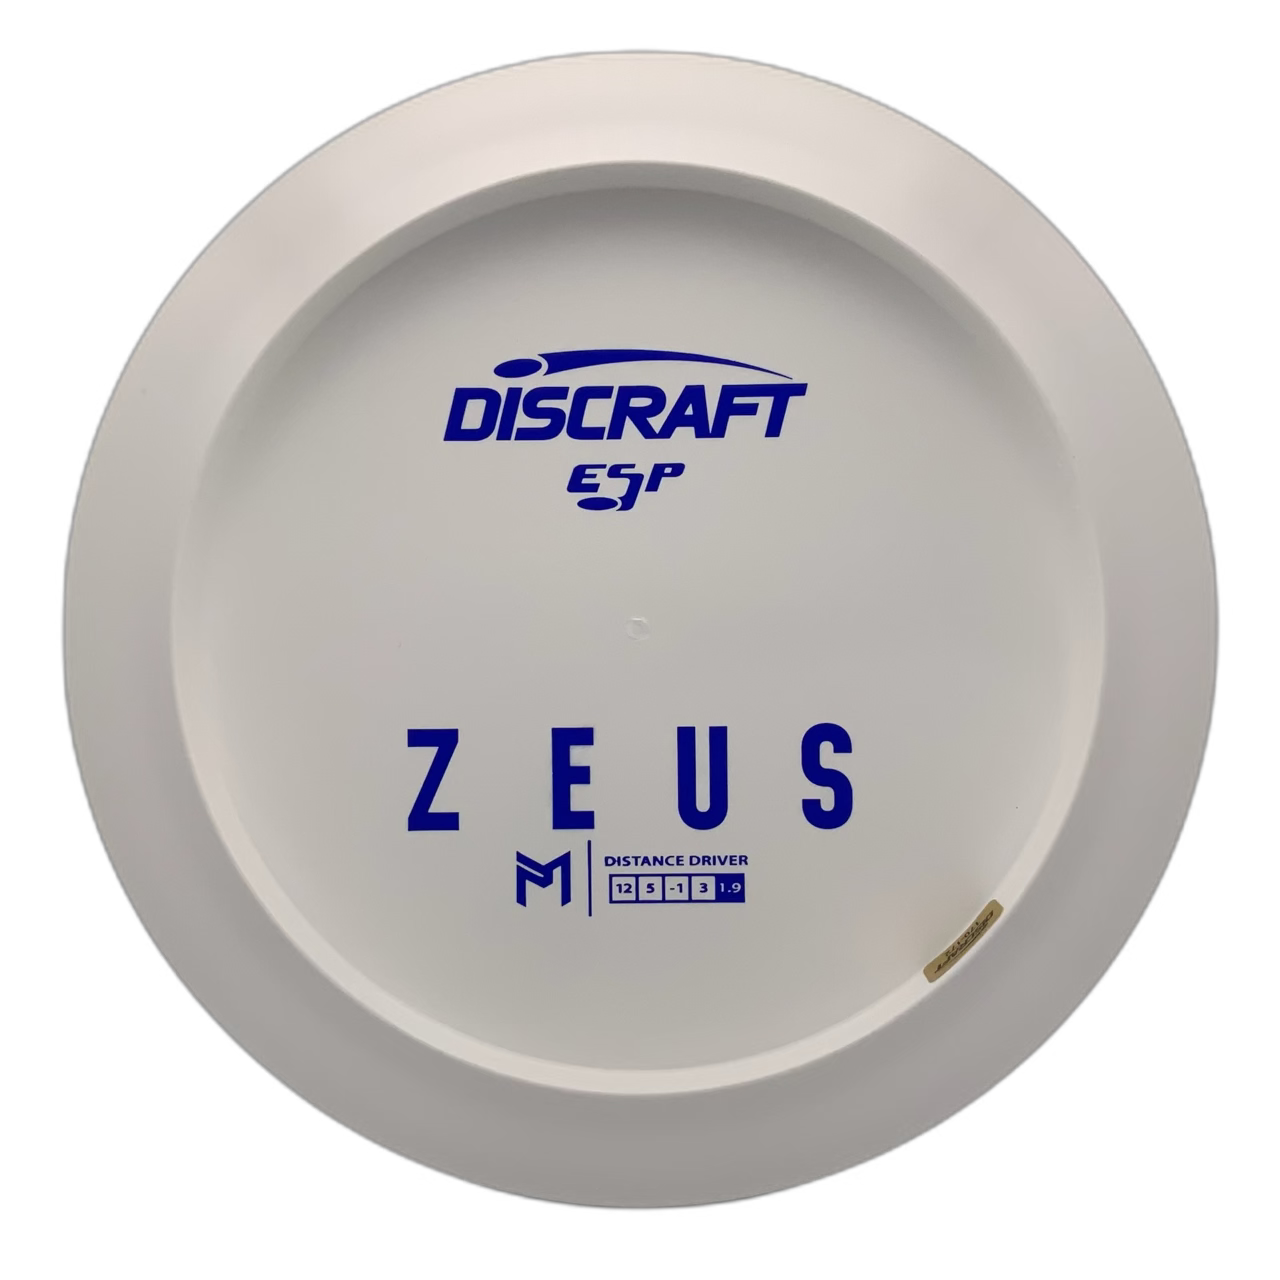 Discraft Zeus - Astro Discs TX - Houston Disc Golf